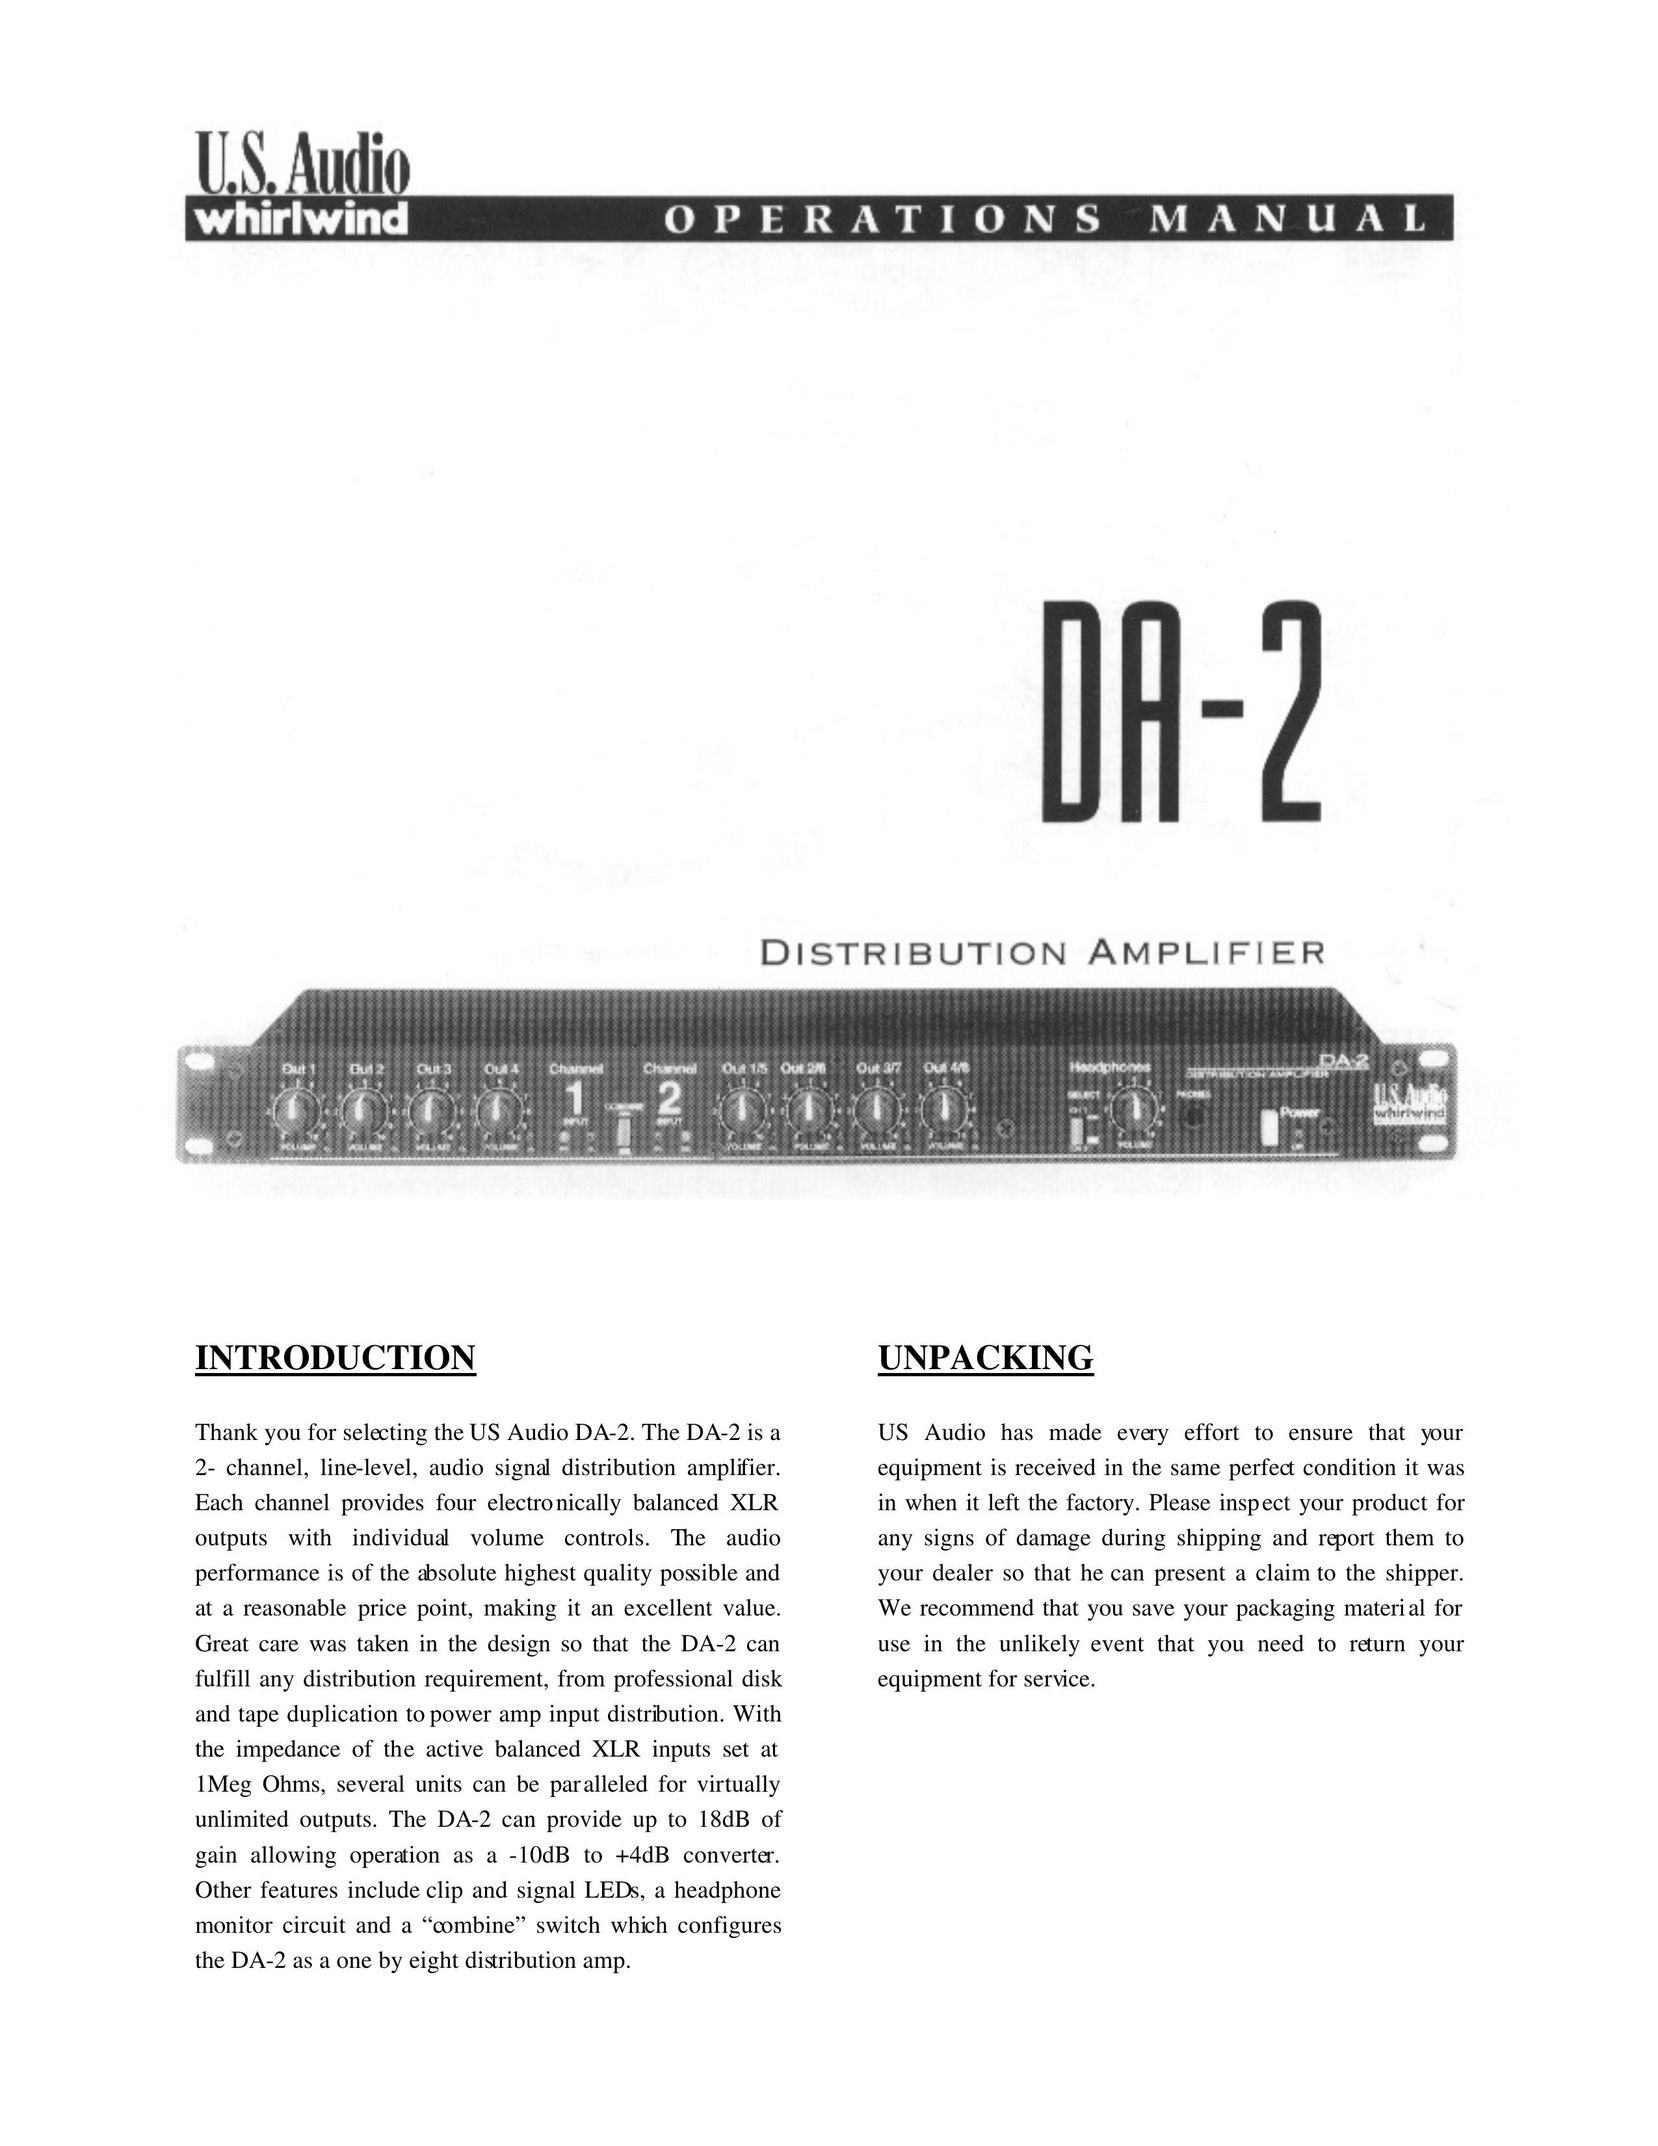 Whirlwind DA-2 Stereo Amplifier User Manual